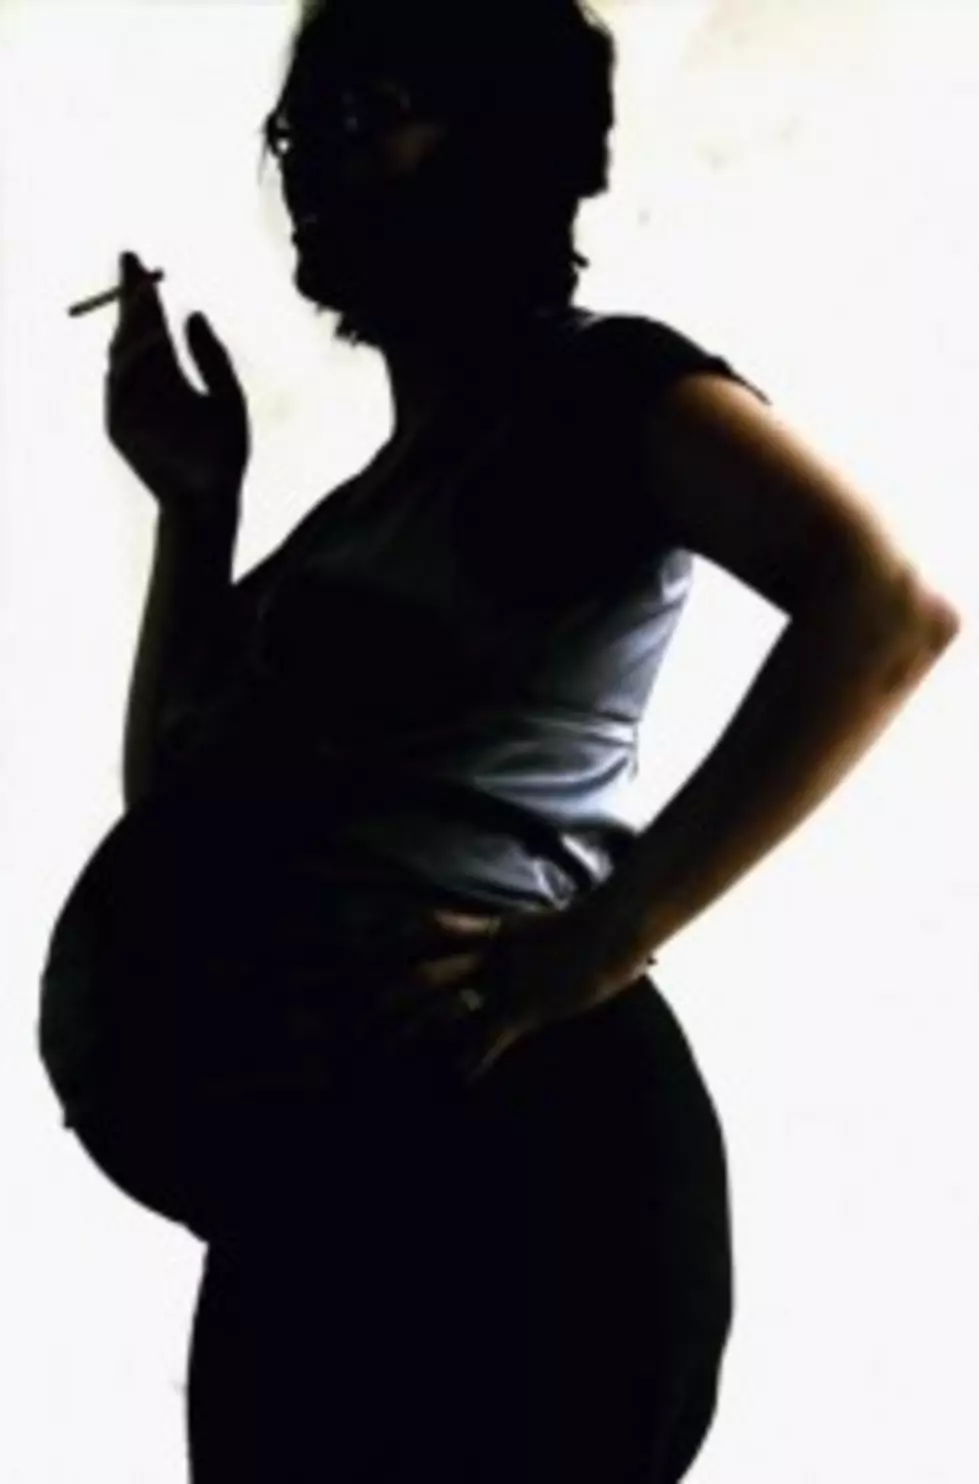 Man Allegedly Pulls Gun on Pregnant Smoker